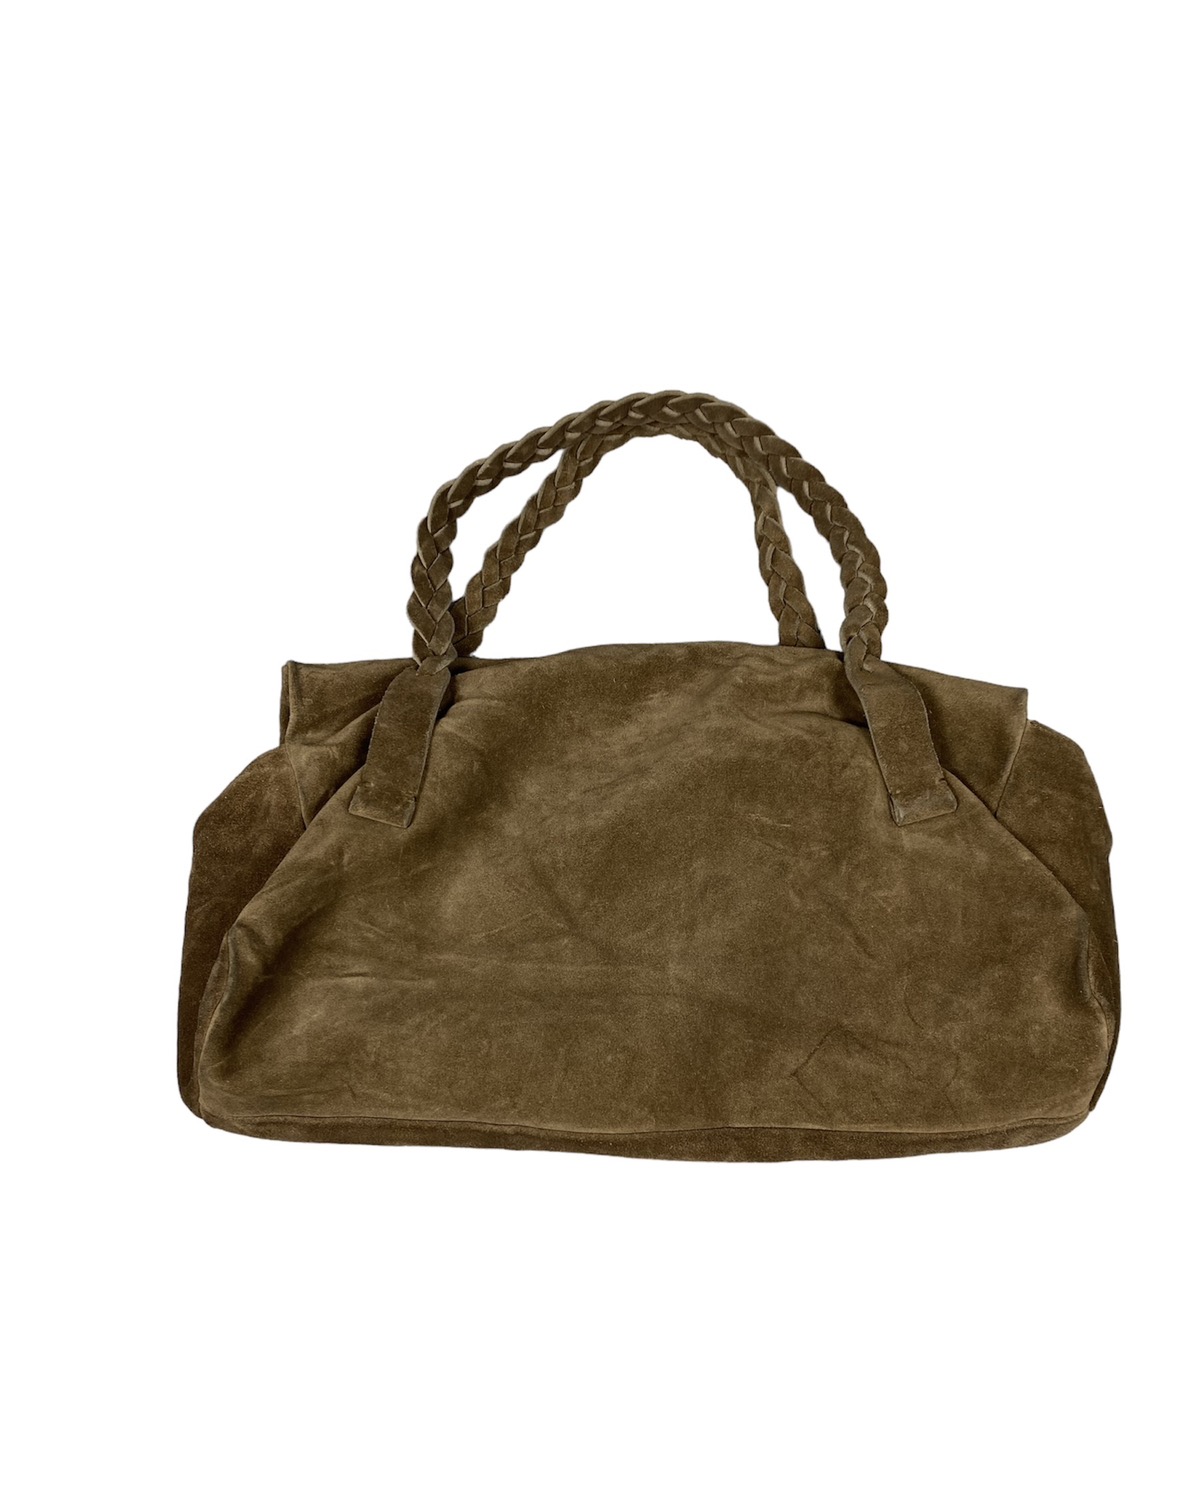 Miu Miu Suede Leather Bag - 2